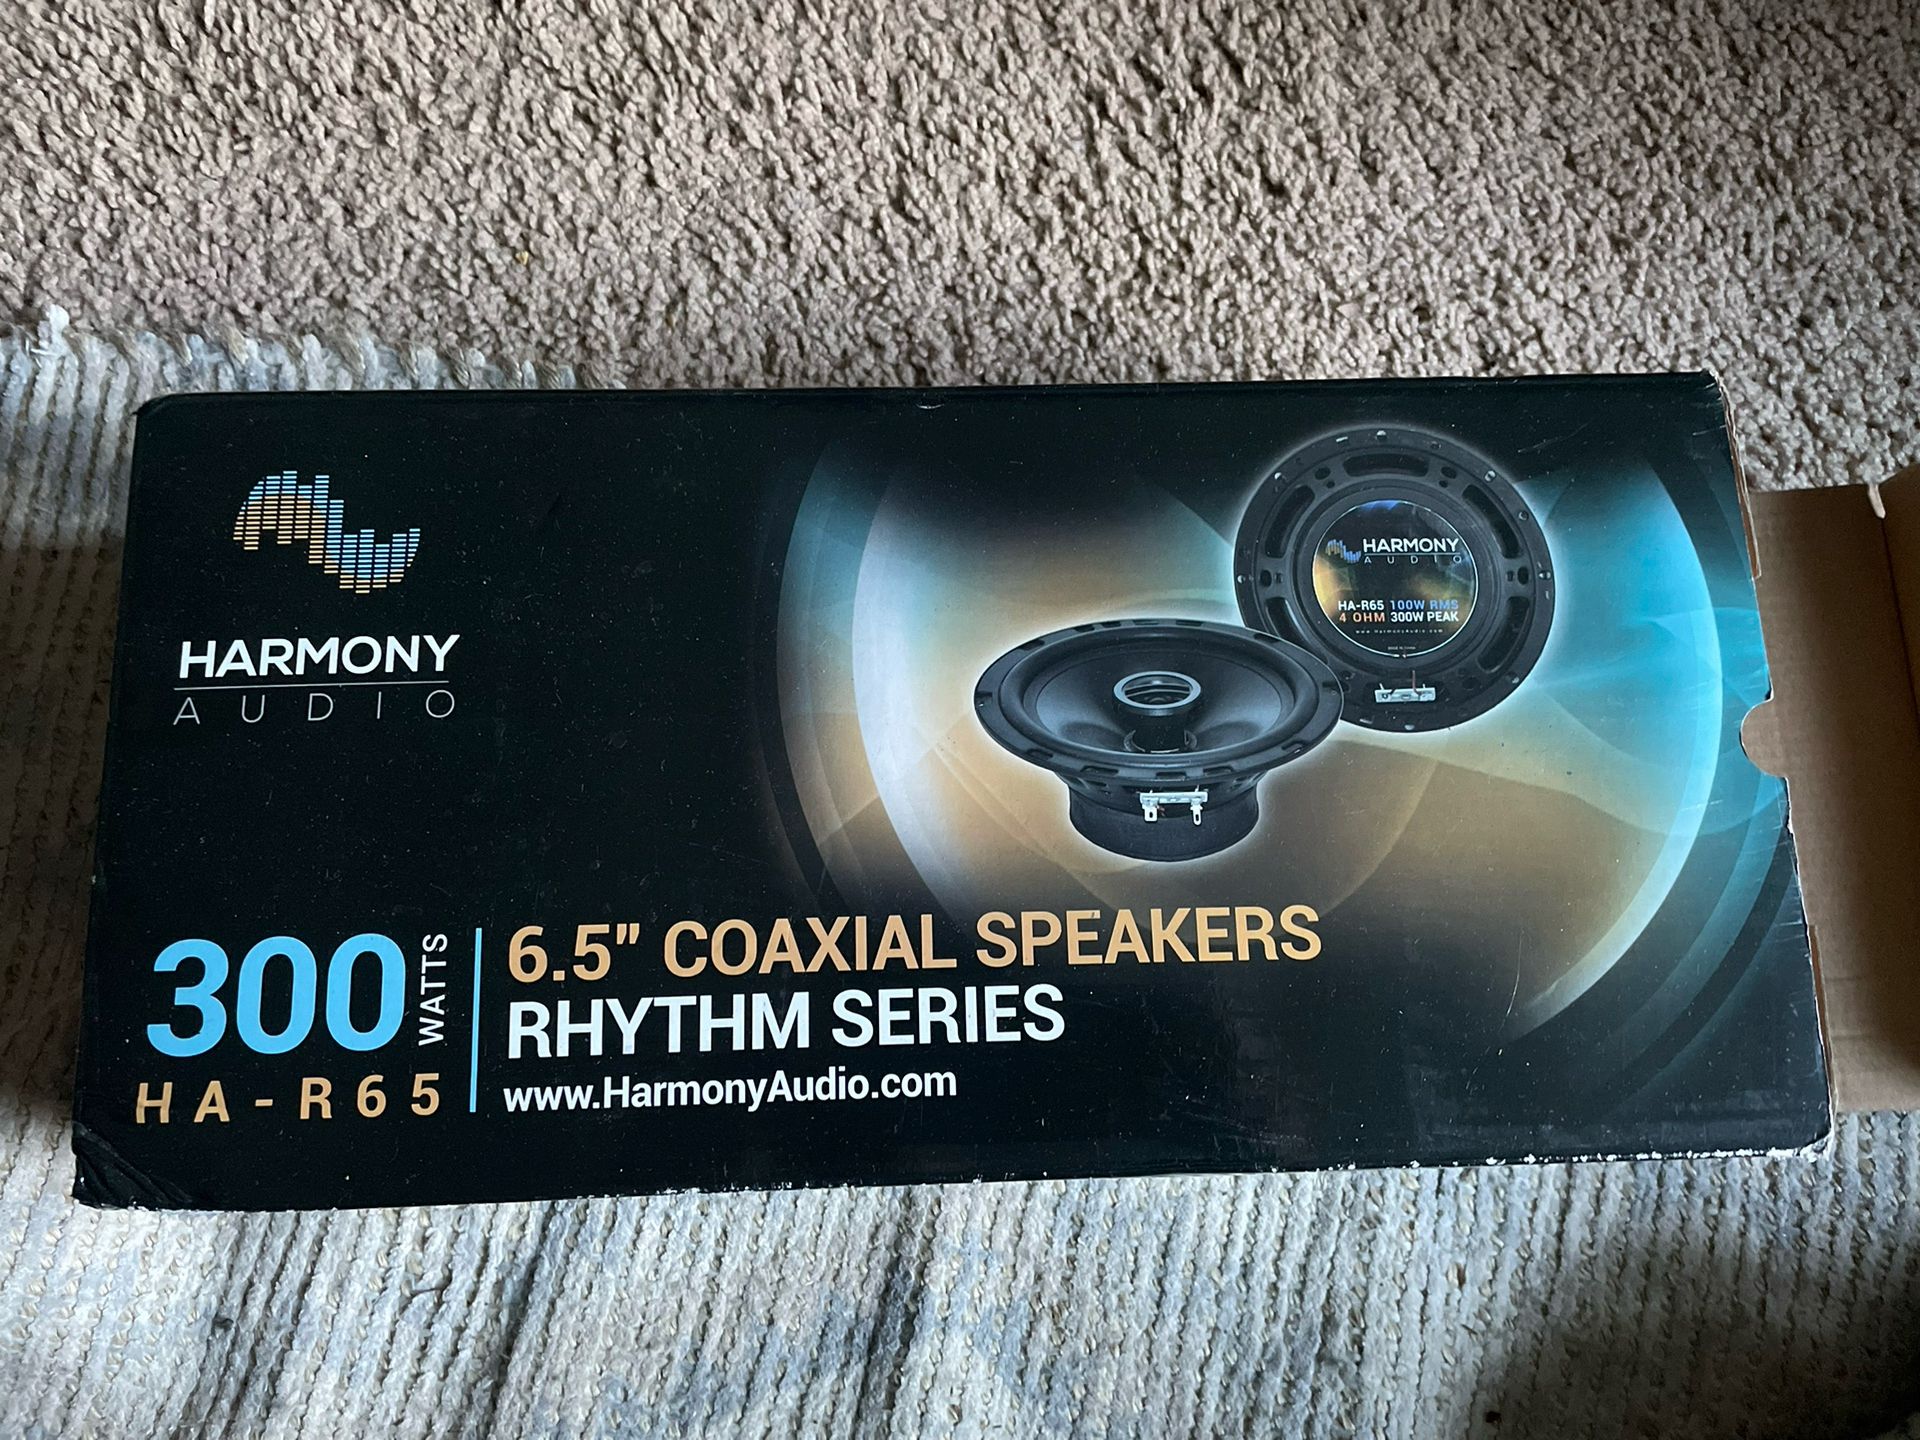 Harmony Car Speakers 300 Watts